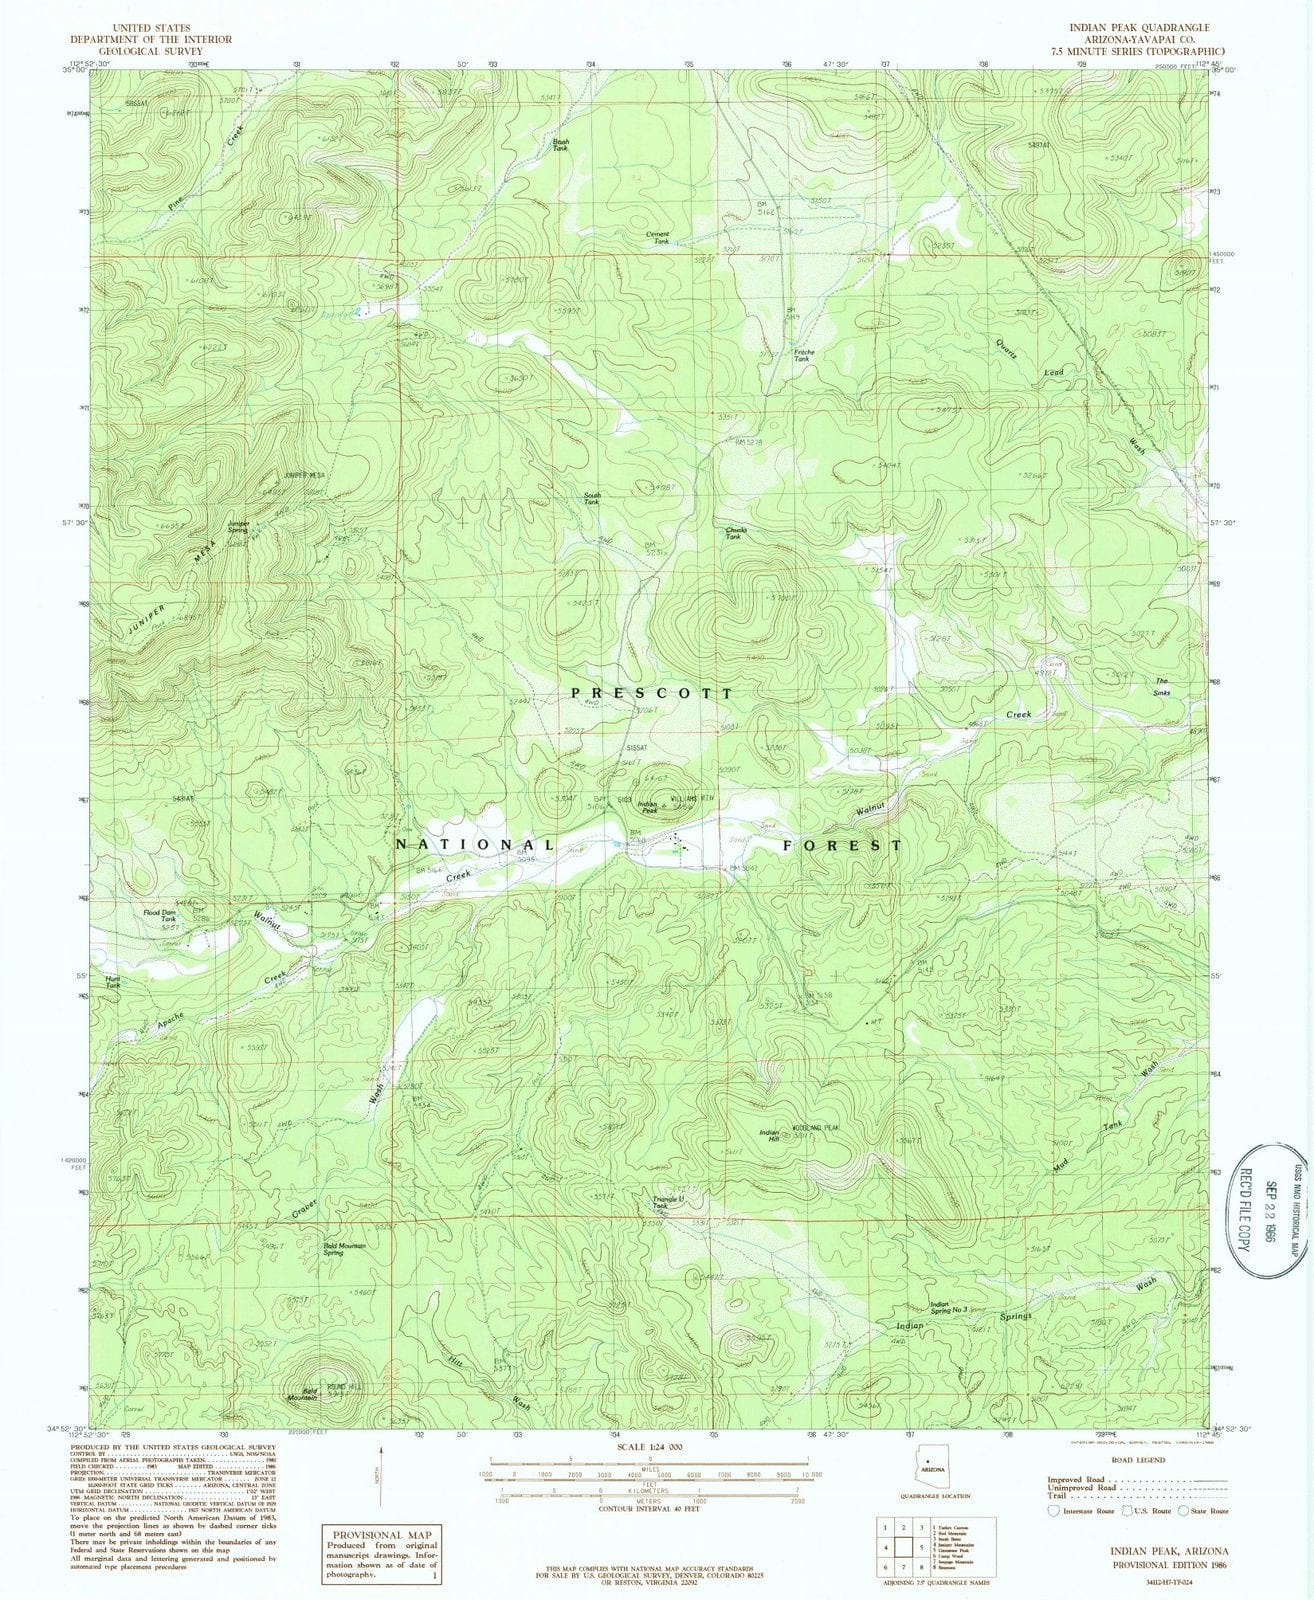 1986 Indian Peak, AZ - Arizona - USGS Topographic Map